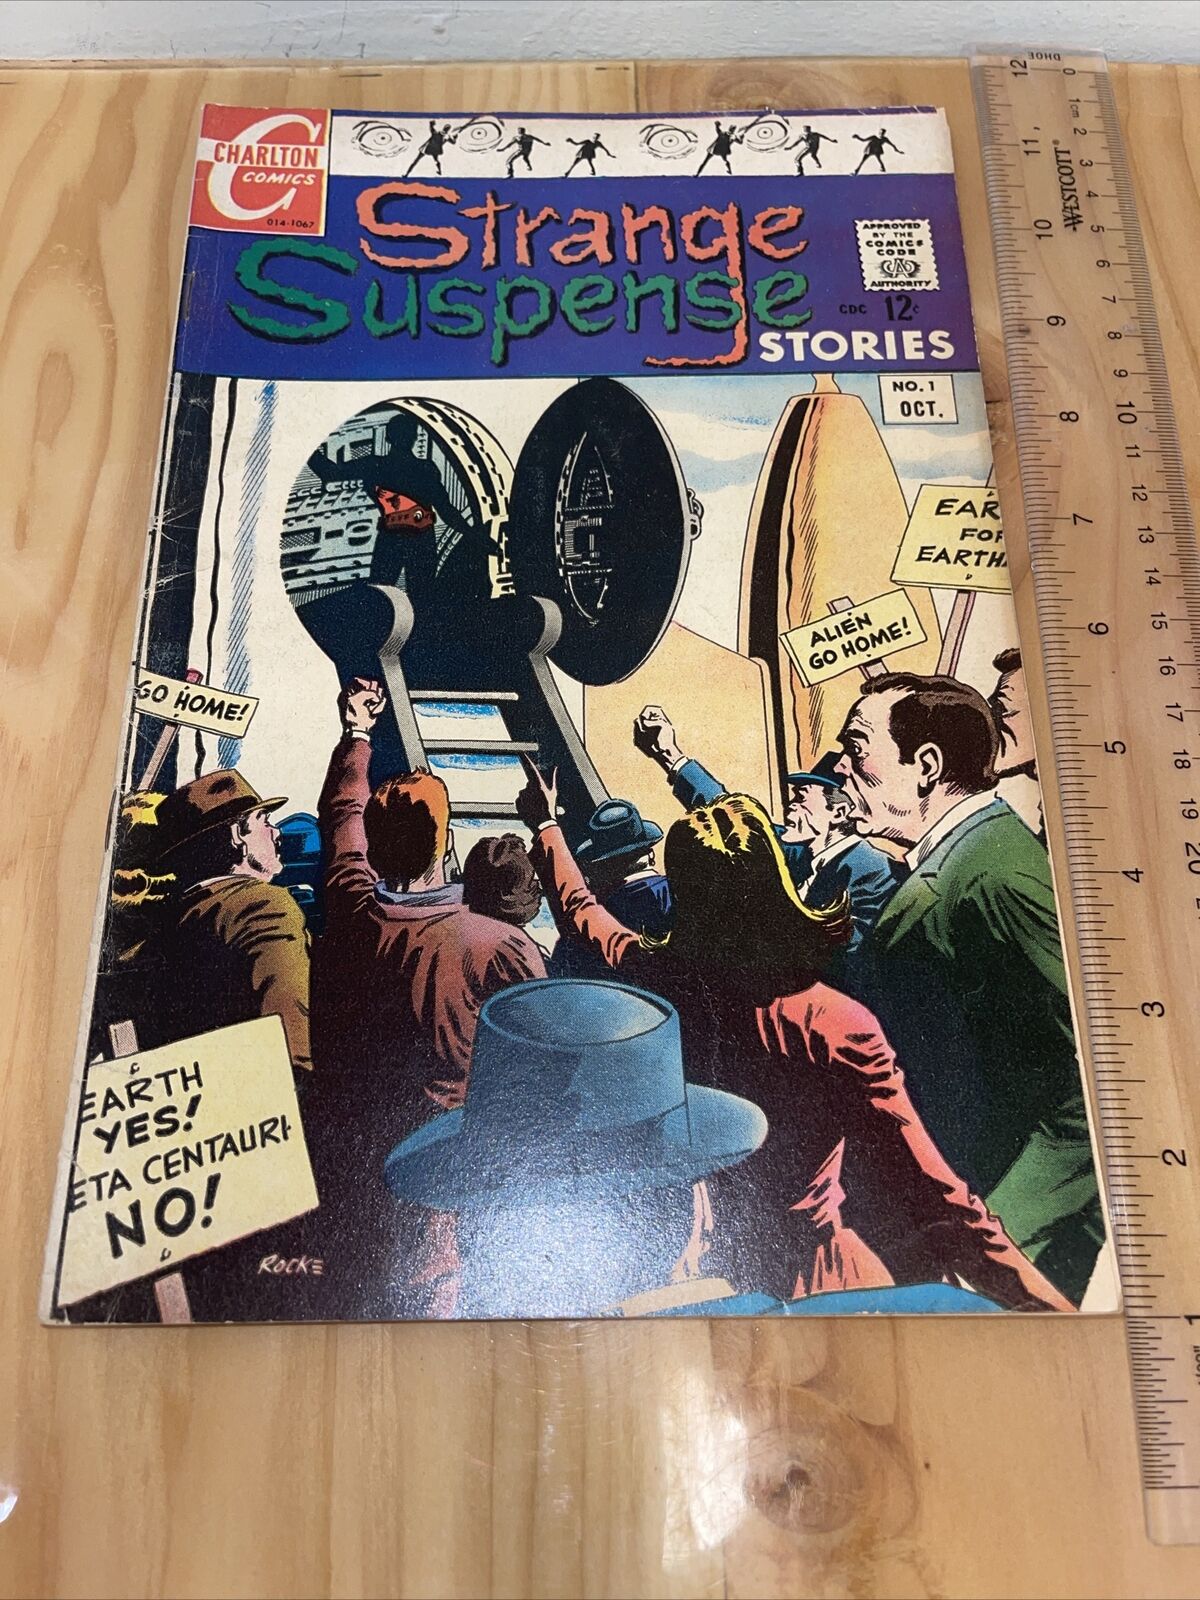 Charlton Comics Strange Suspence Stories #1 1967